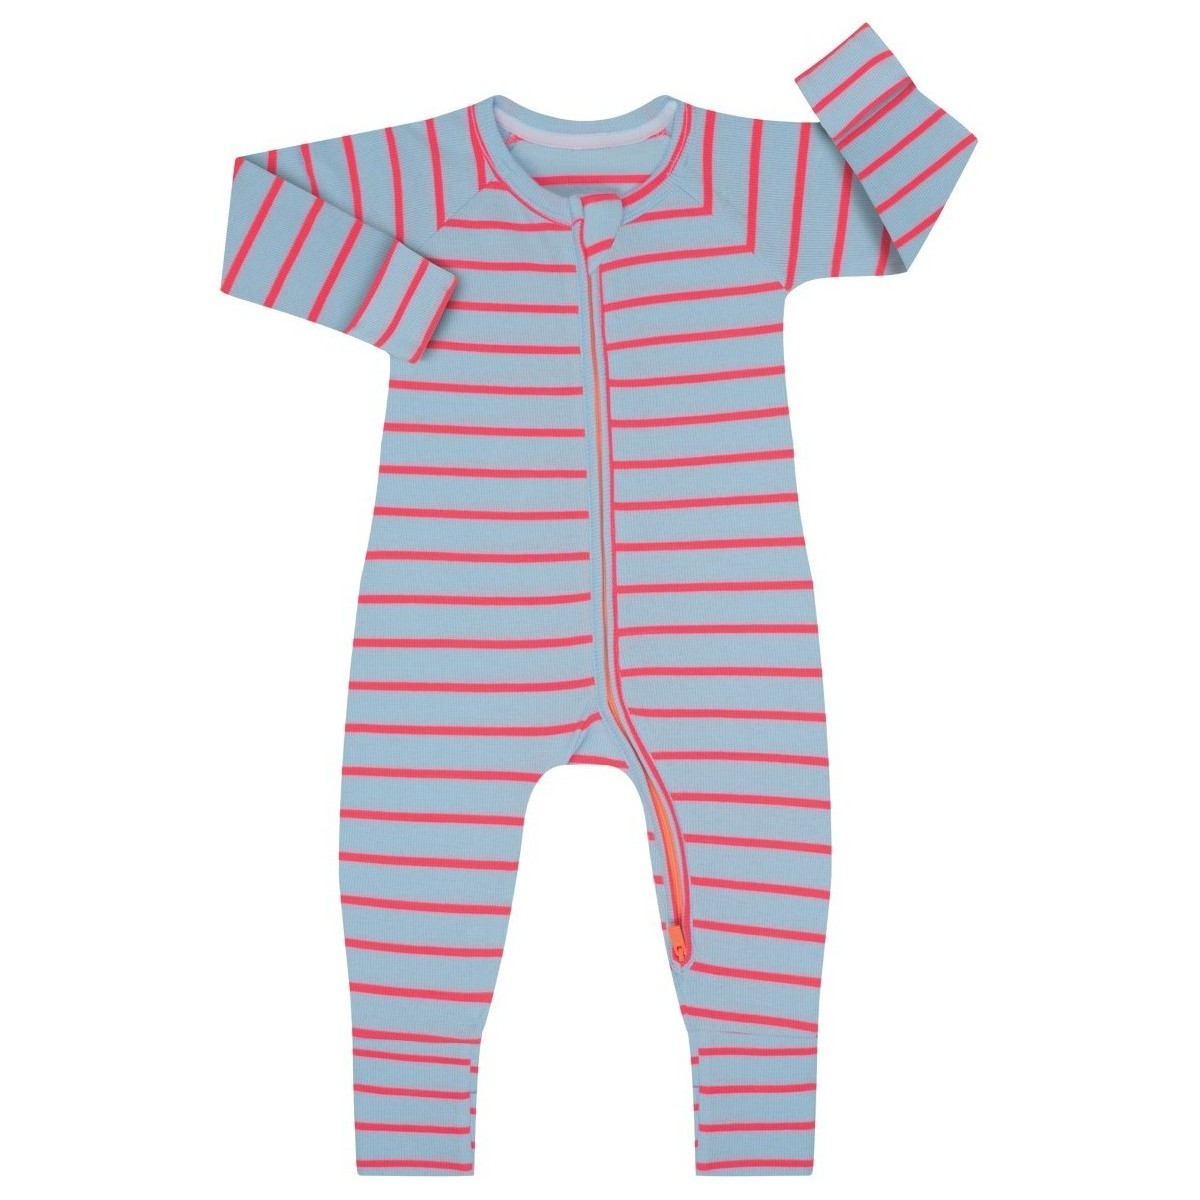 Textiel Kinderen Pyjama's / nachthemden DIM D0A0I-9KK Multicolour